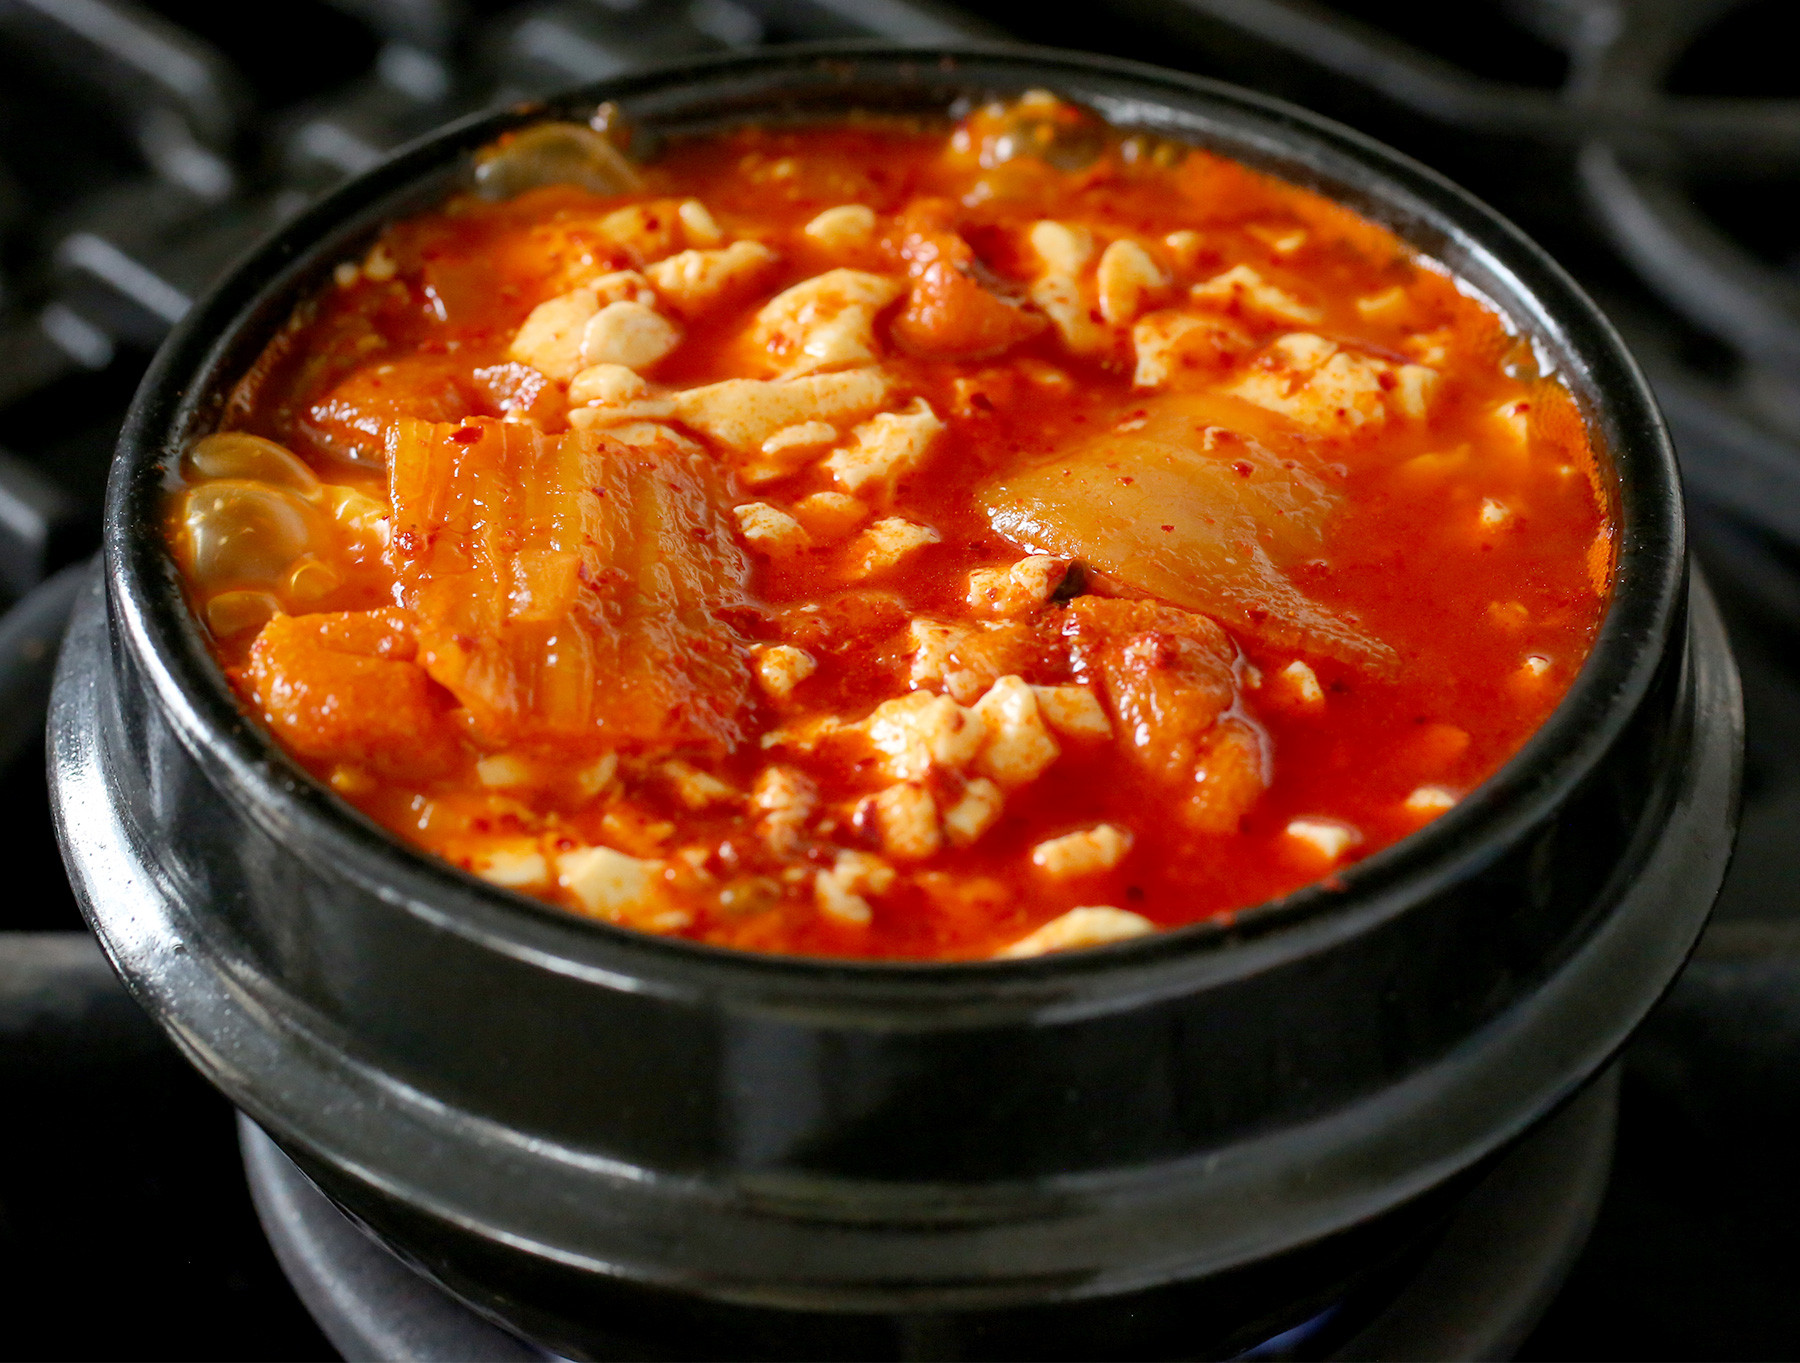 25 Ideas for Kimchi tofu soup Recipes - Home, Family, Style and Art Ideas